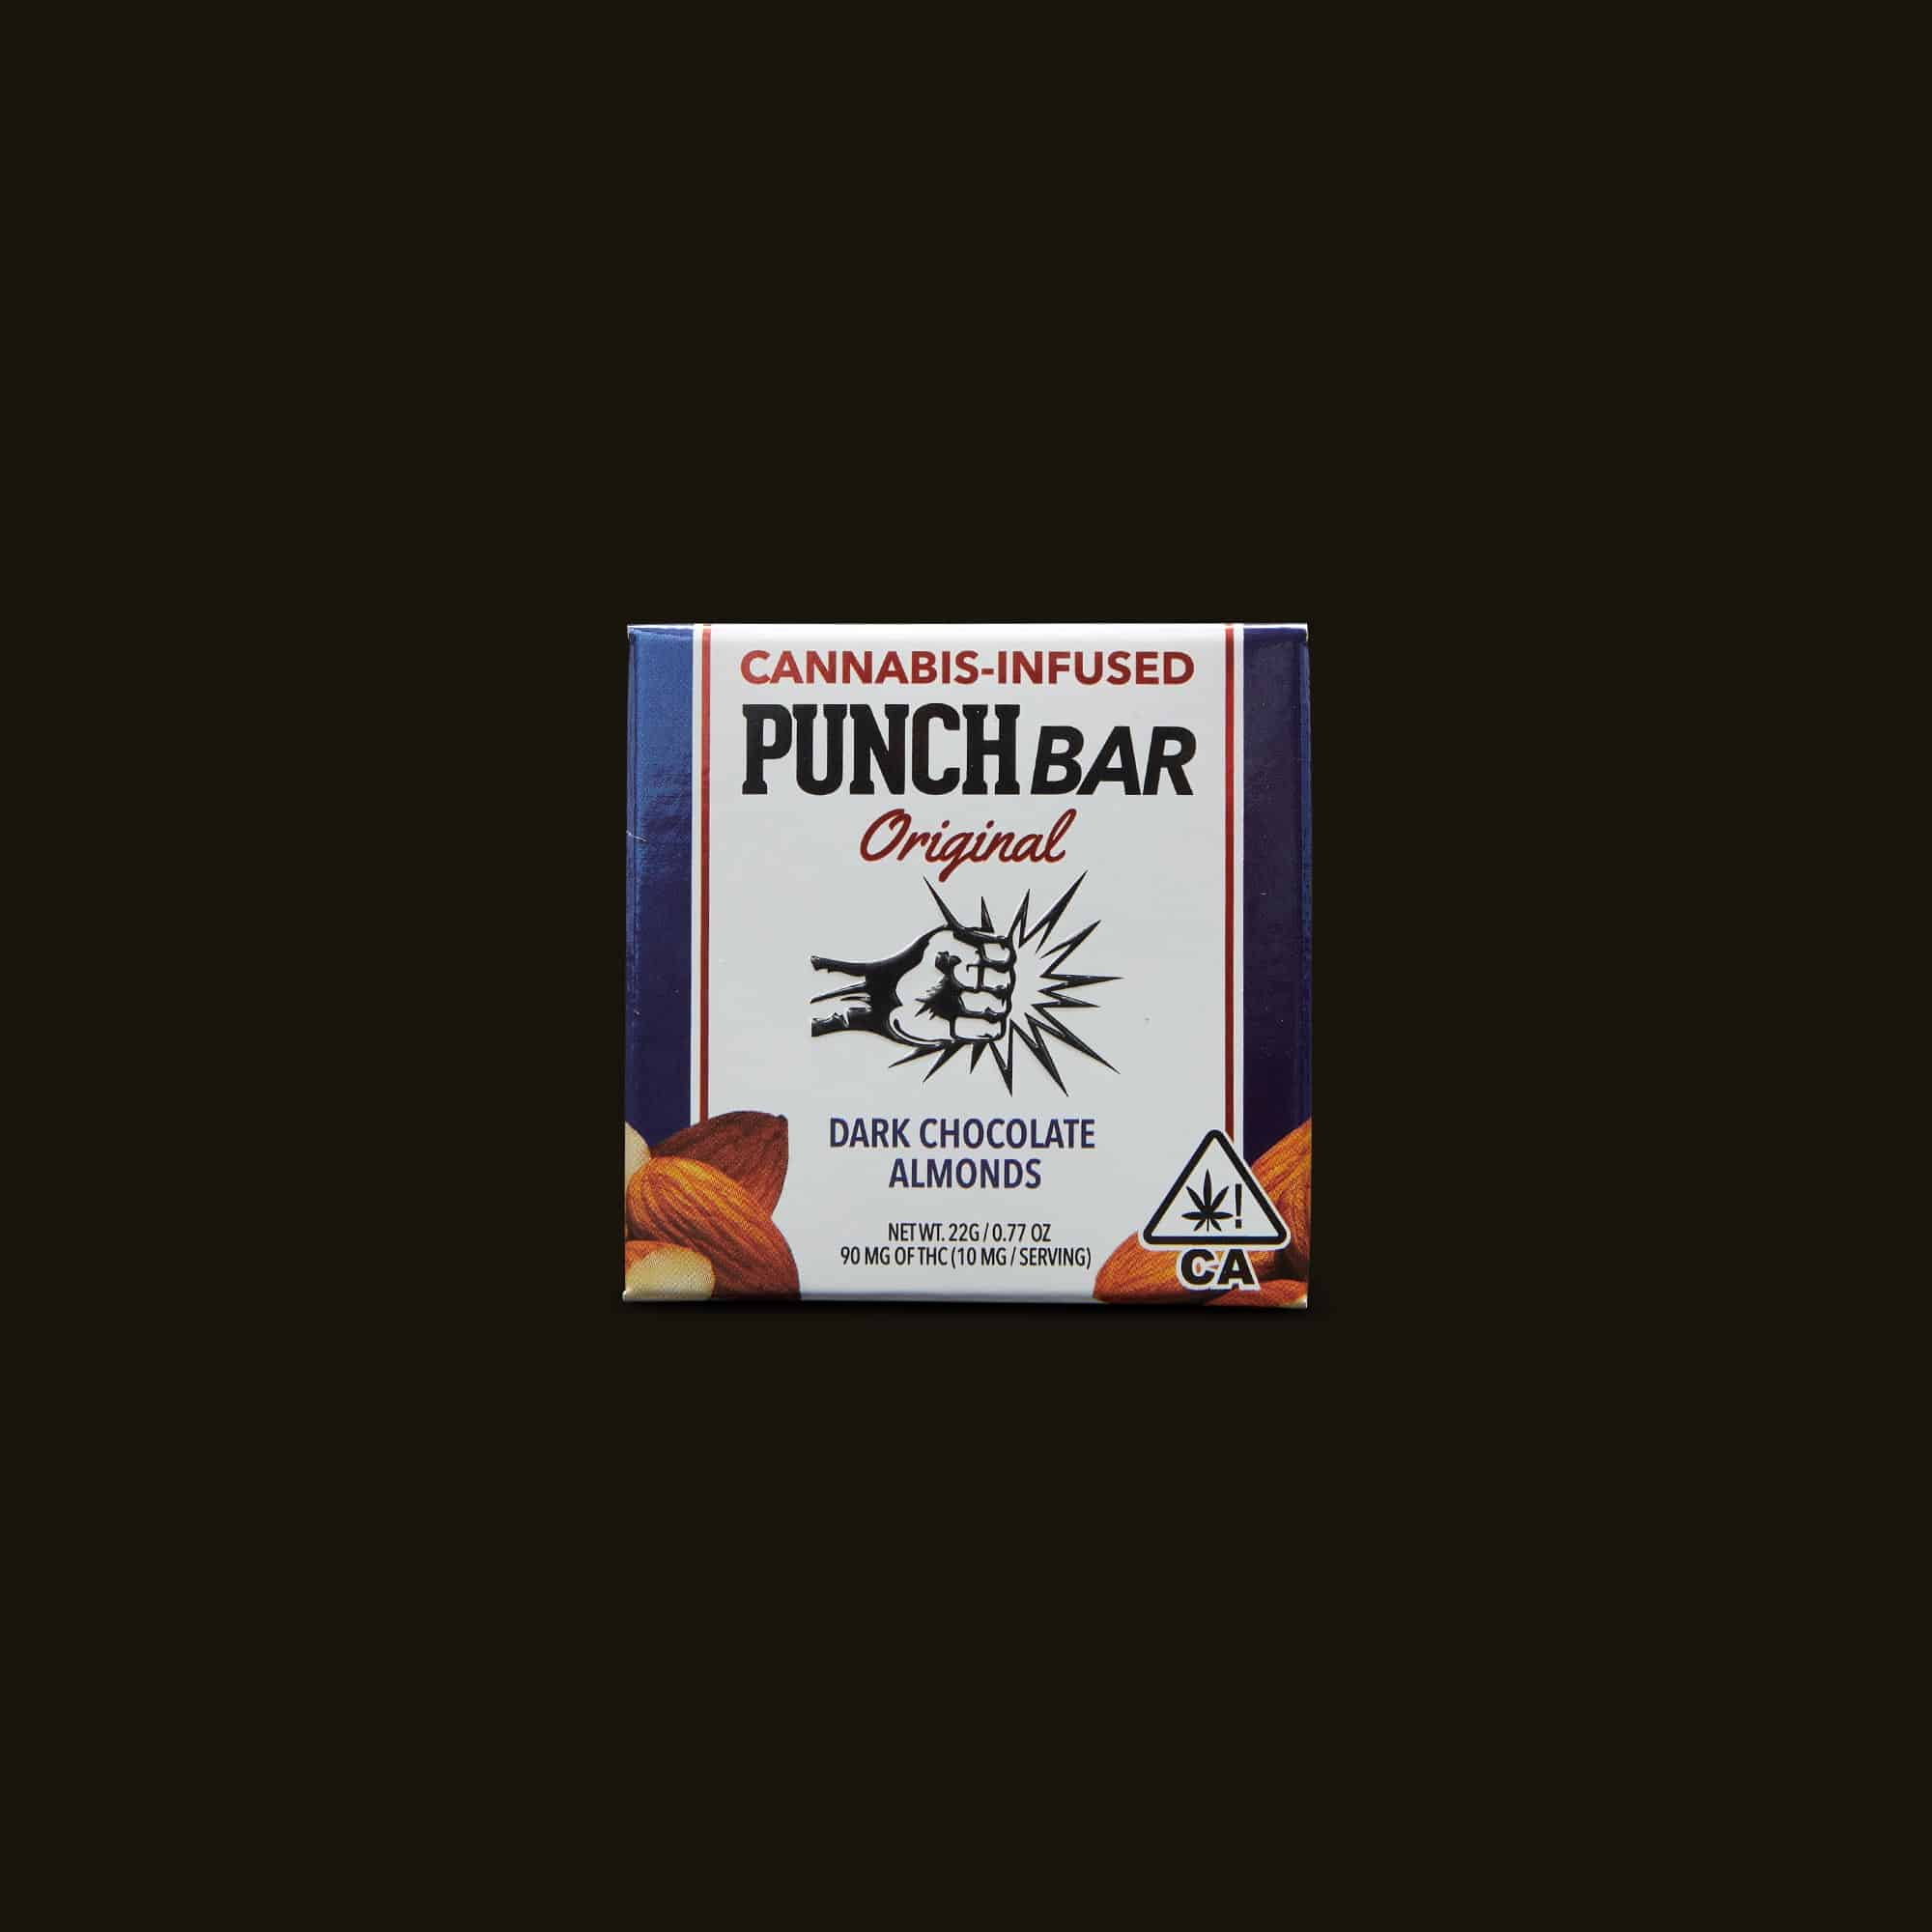 Punch-Punch-Bar-Dark-Chocolate-Almonds1580-1611328.jpg